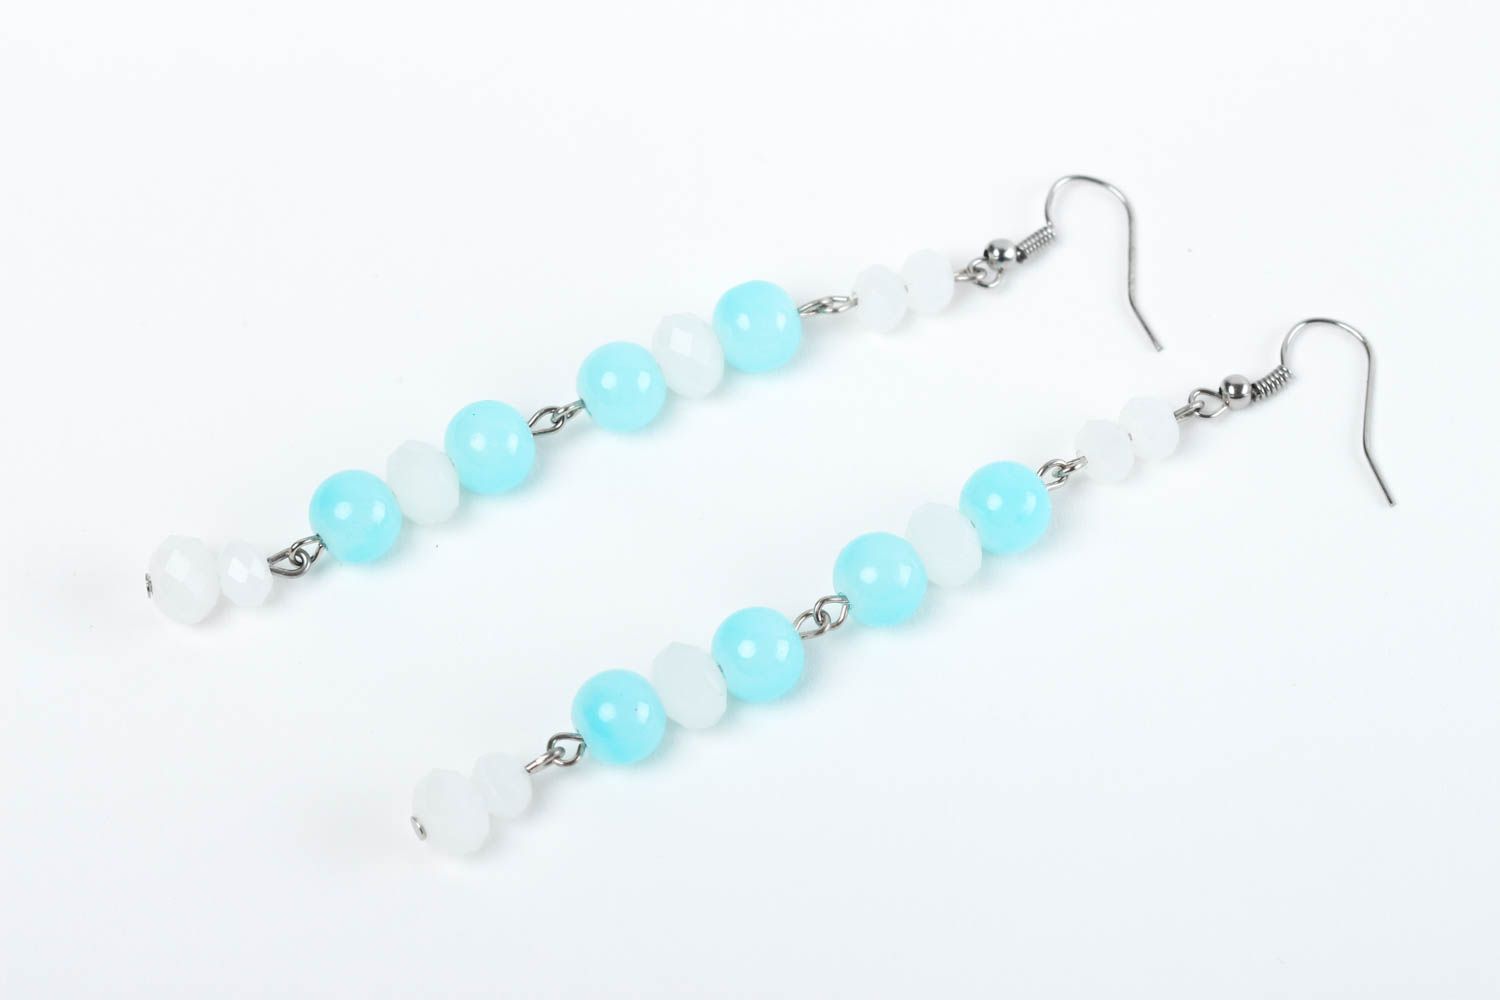 Handmade earrings designer earrings with stones unusual accessory beads jewelry photo 2